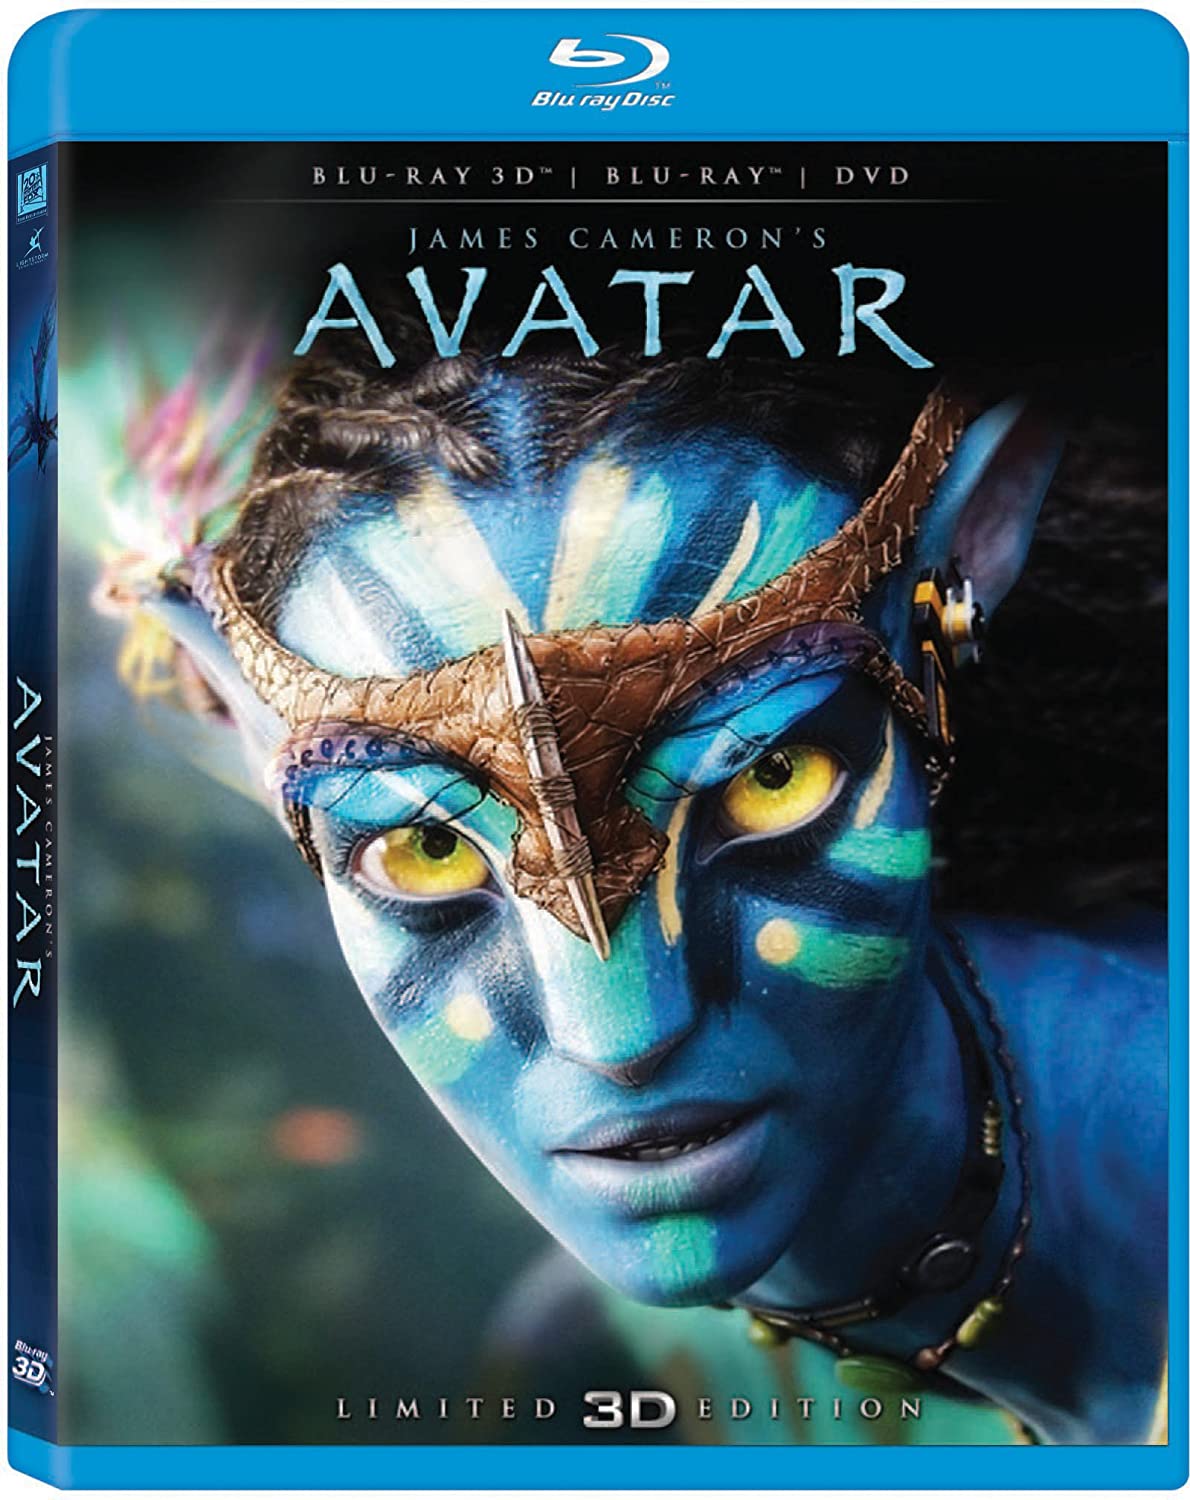 Avatar (Blu-ray 3D + Blu-ray / DVD Combo Pack)